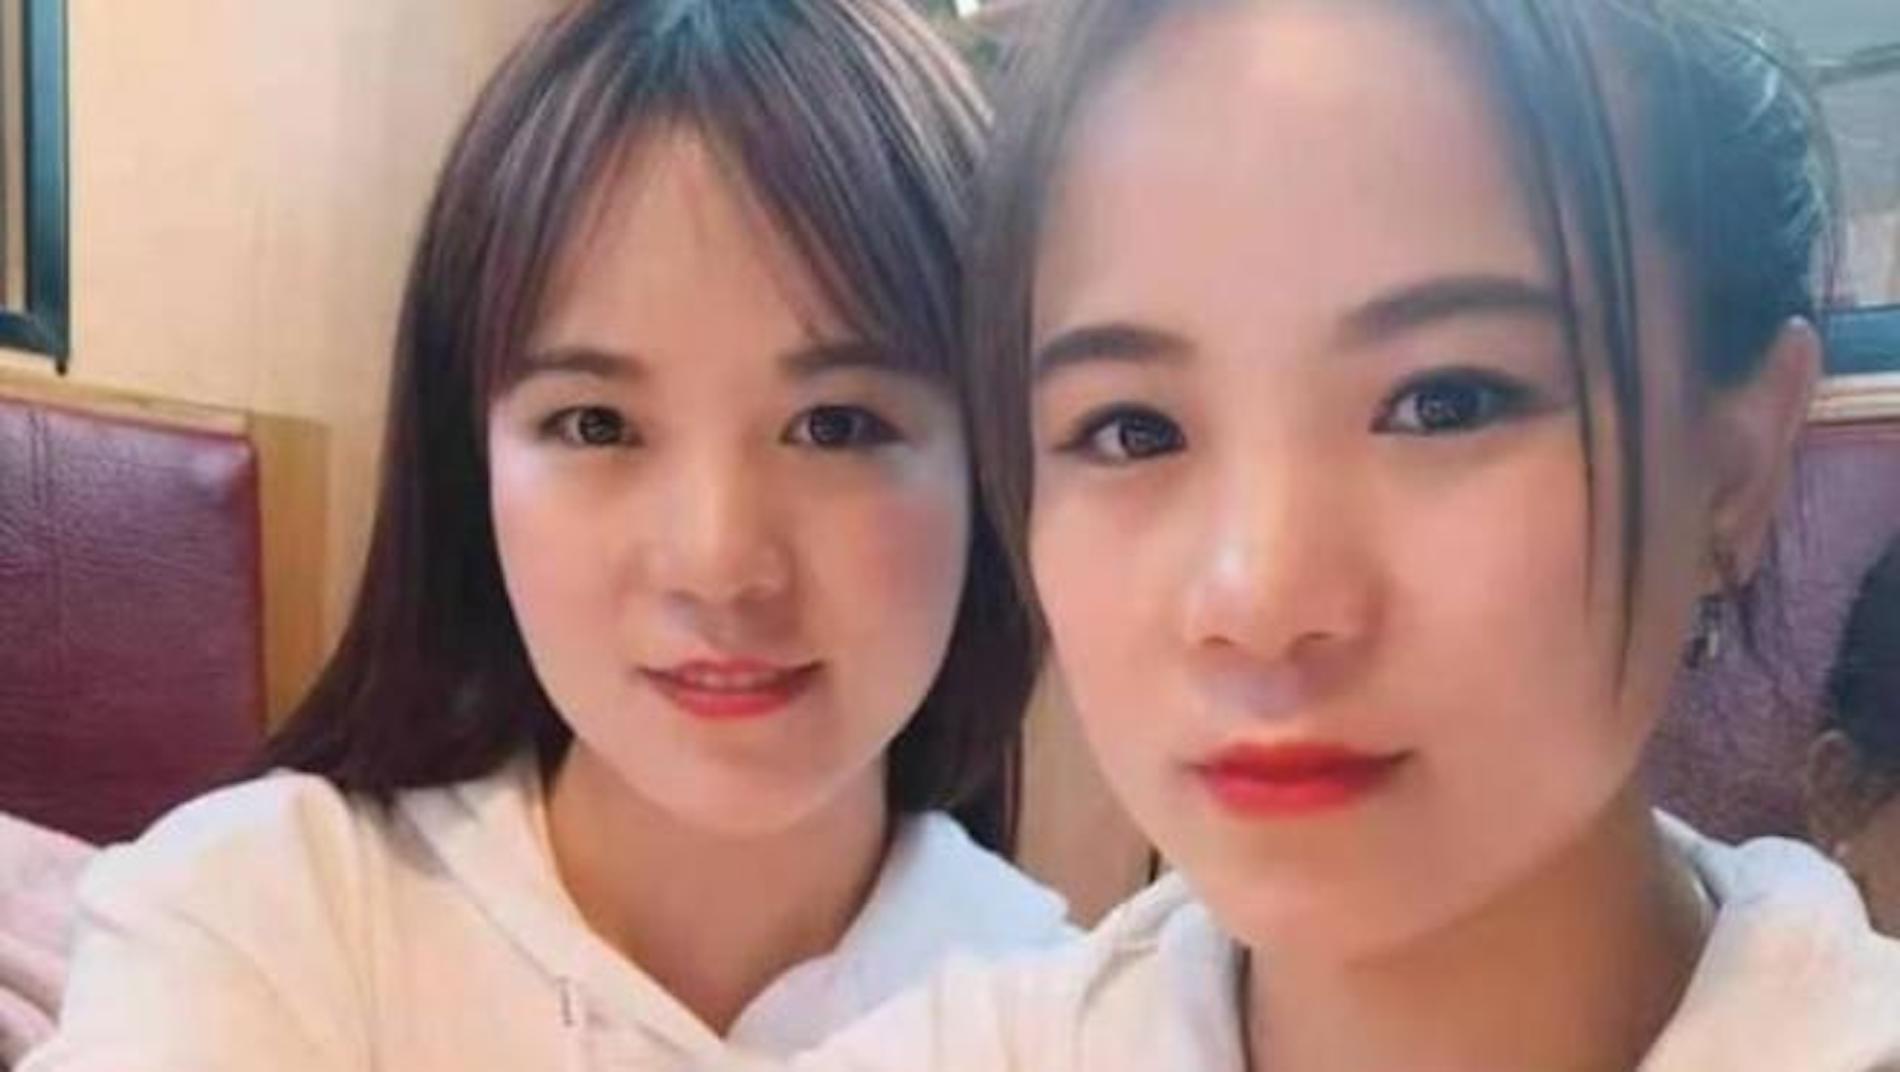 Dos chinas descubren que son hermanas y adoptadas gracias a Tiktok